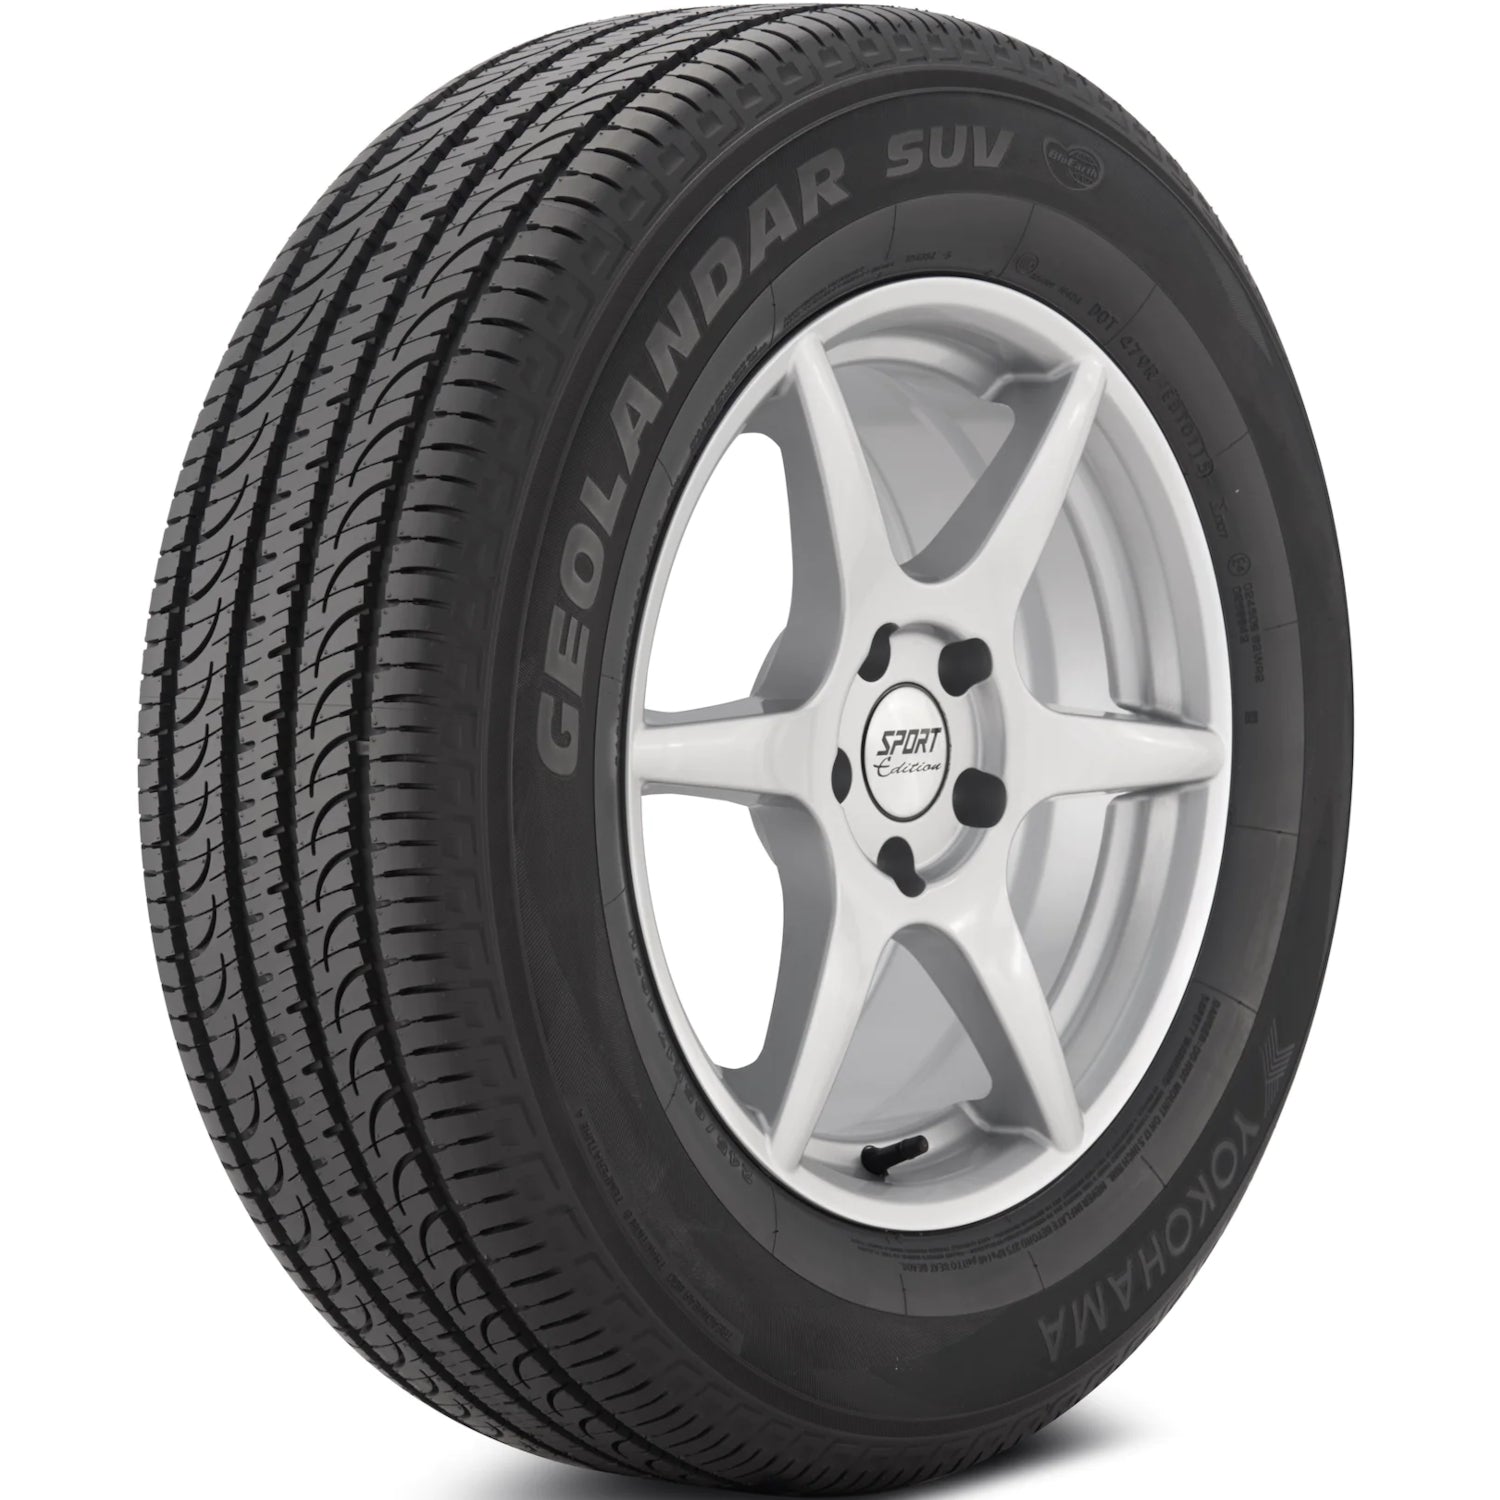 YOKOHAMA GEOLANDAR G055 255/55R20 (31X10.3R 20) Tires